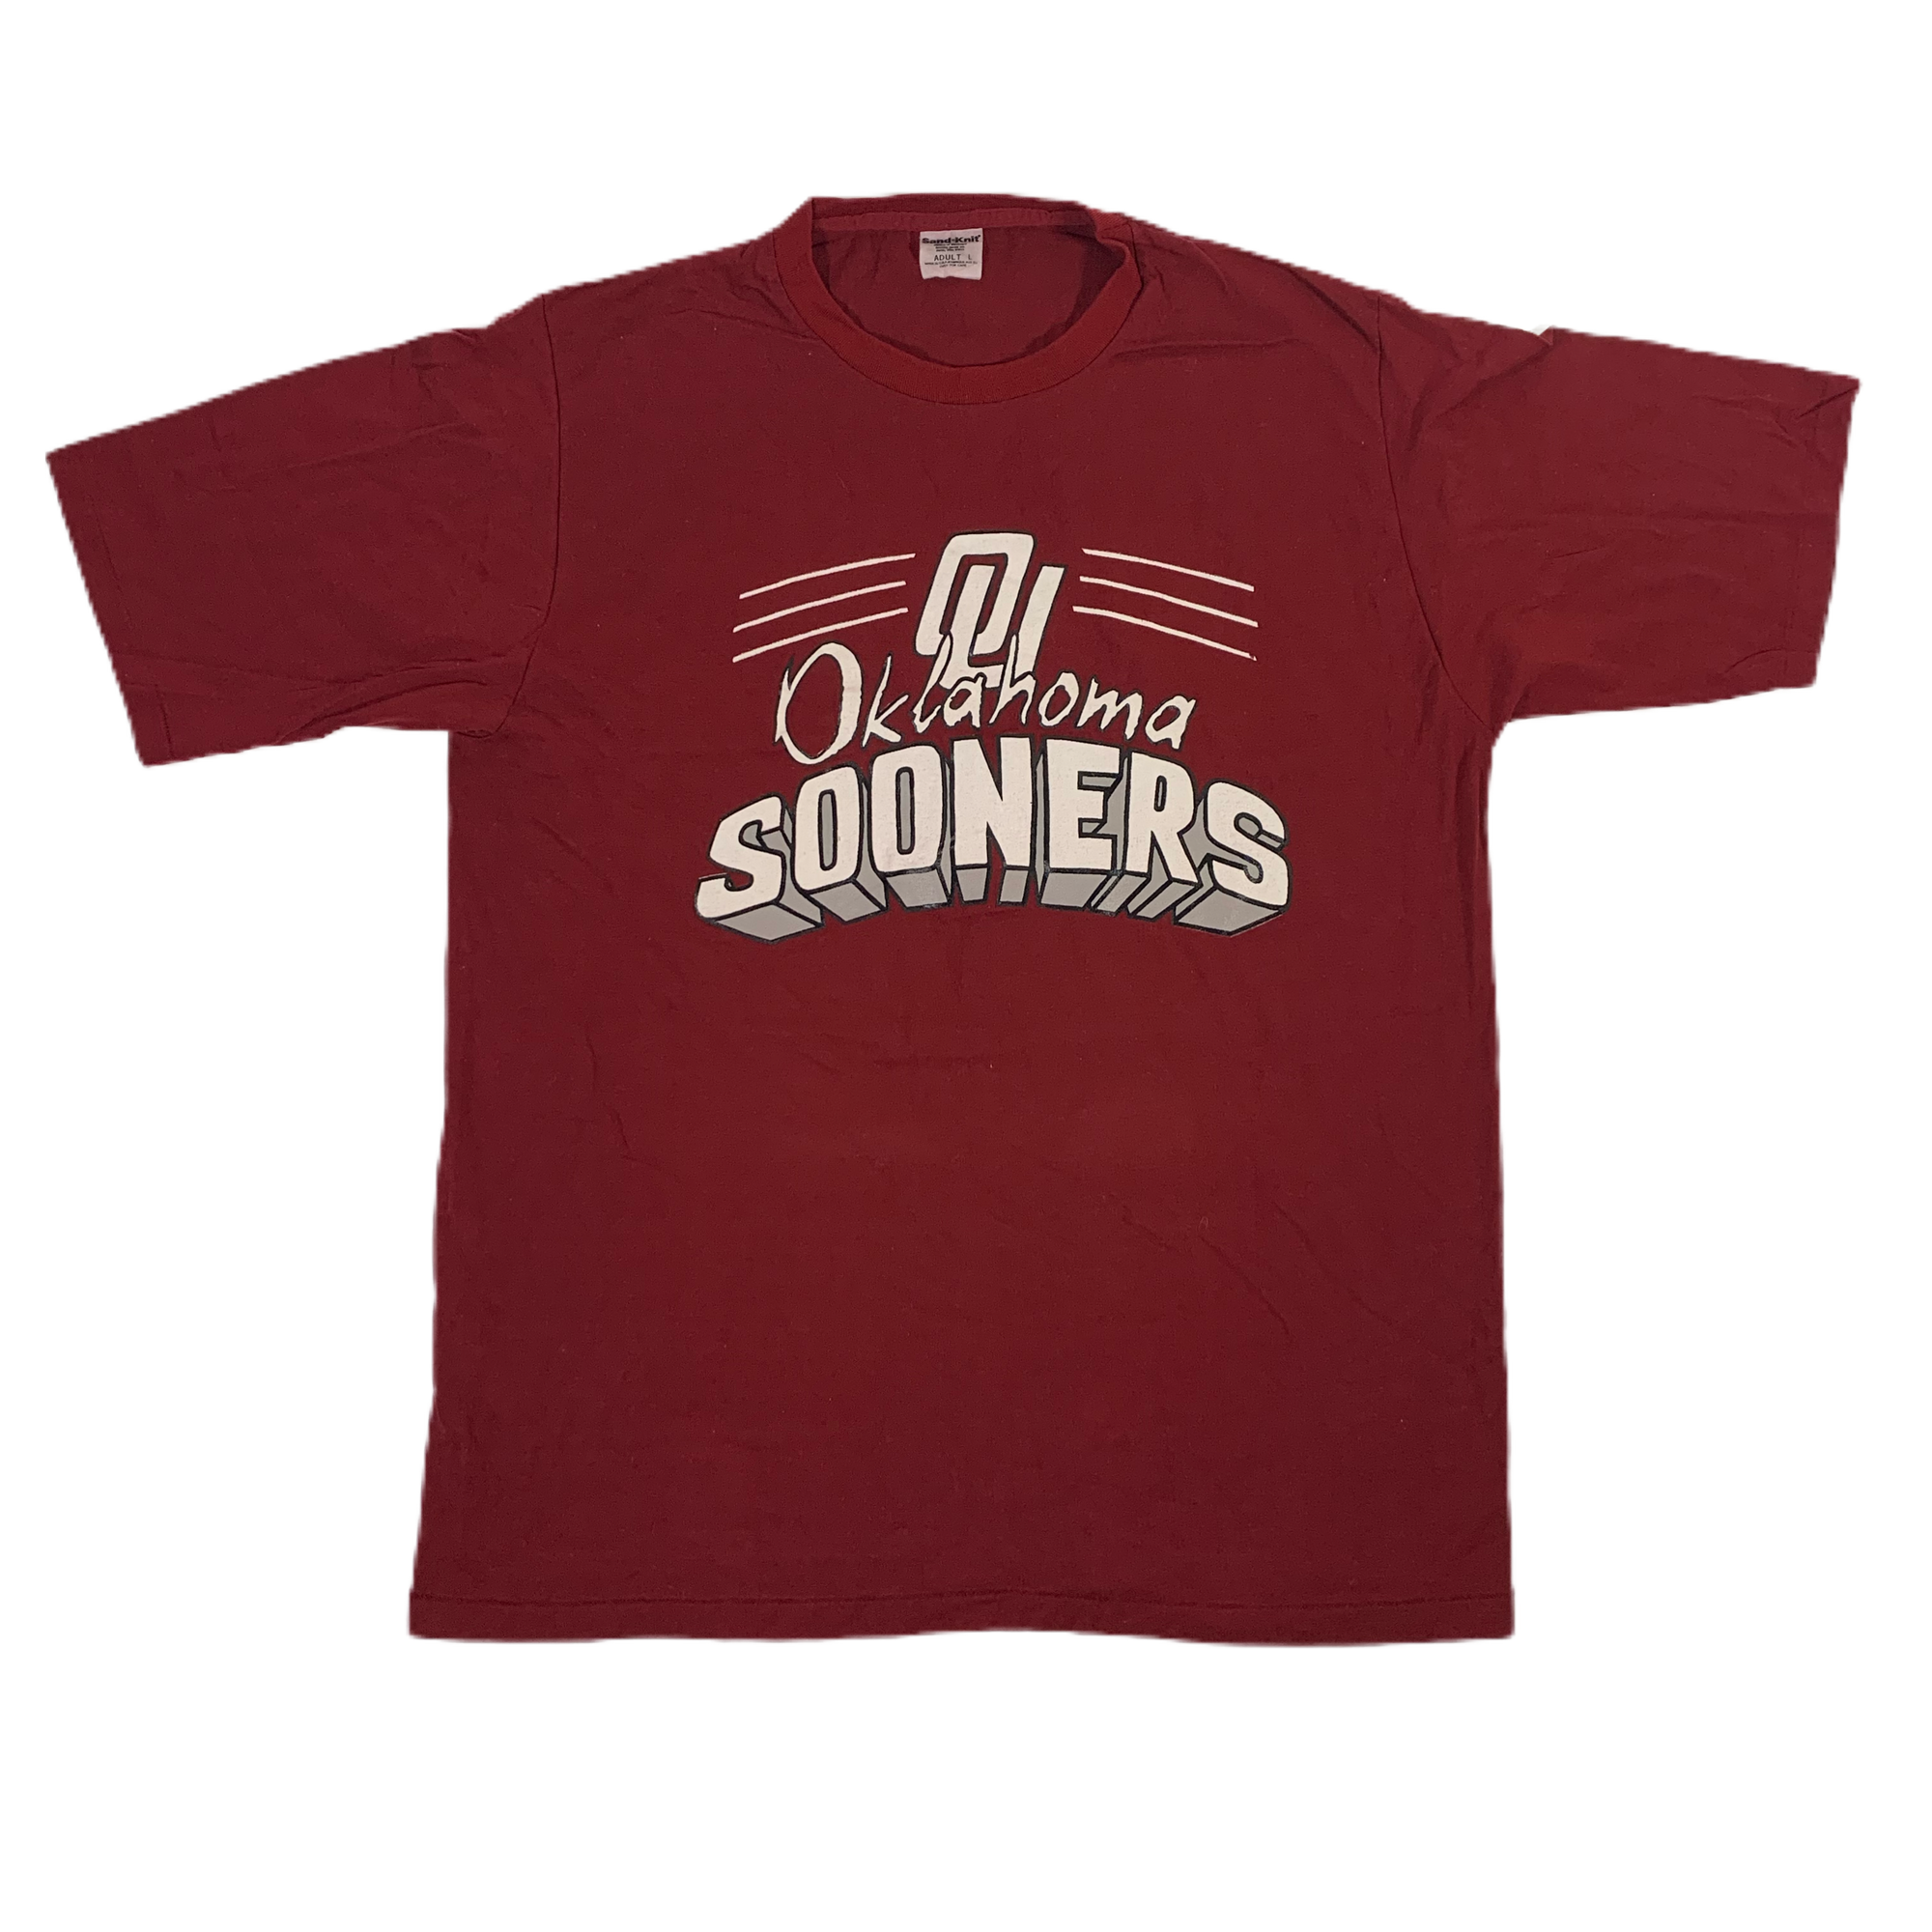 Vintage Oklahoma Sooners “Sandknit” T-Shirt - jointcustodydc